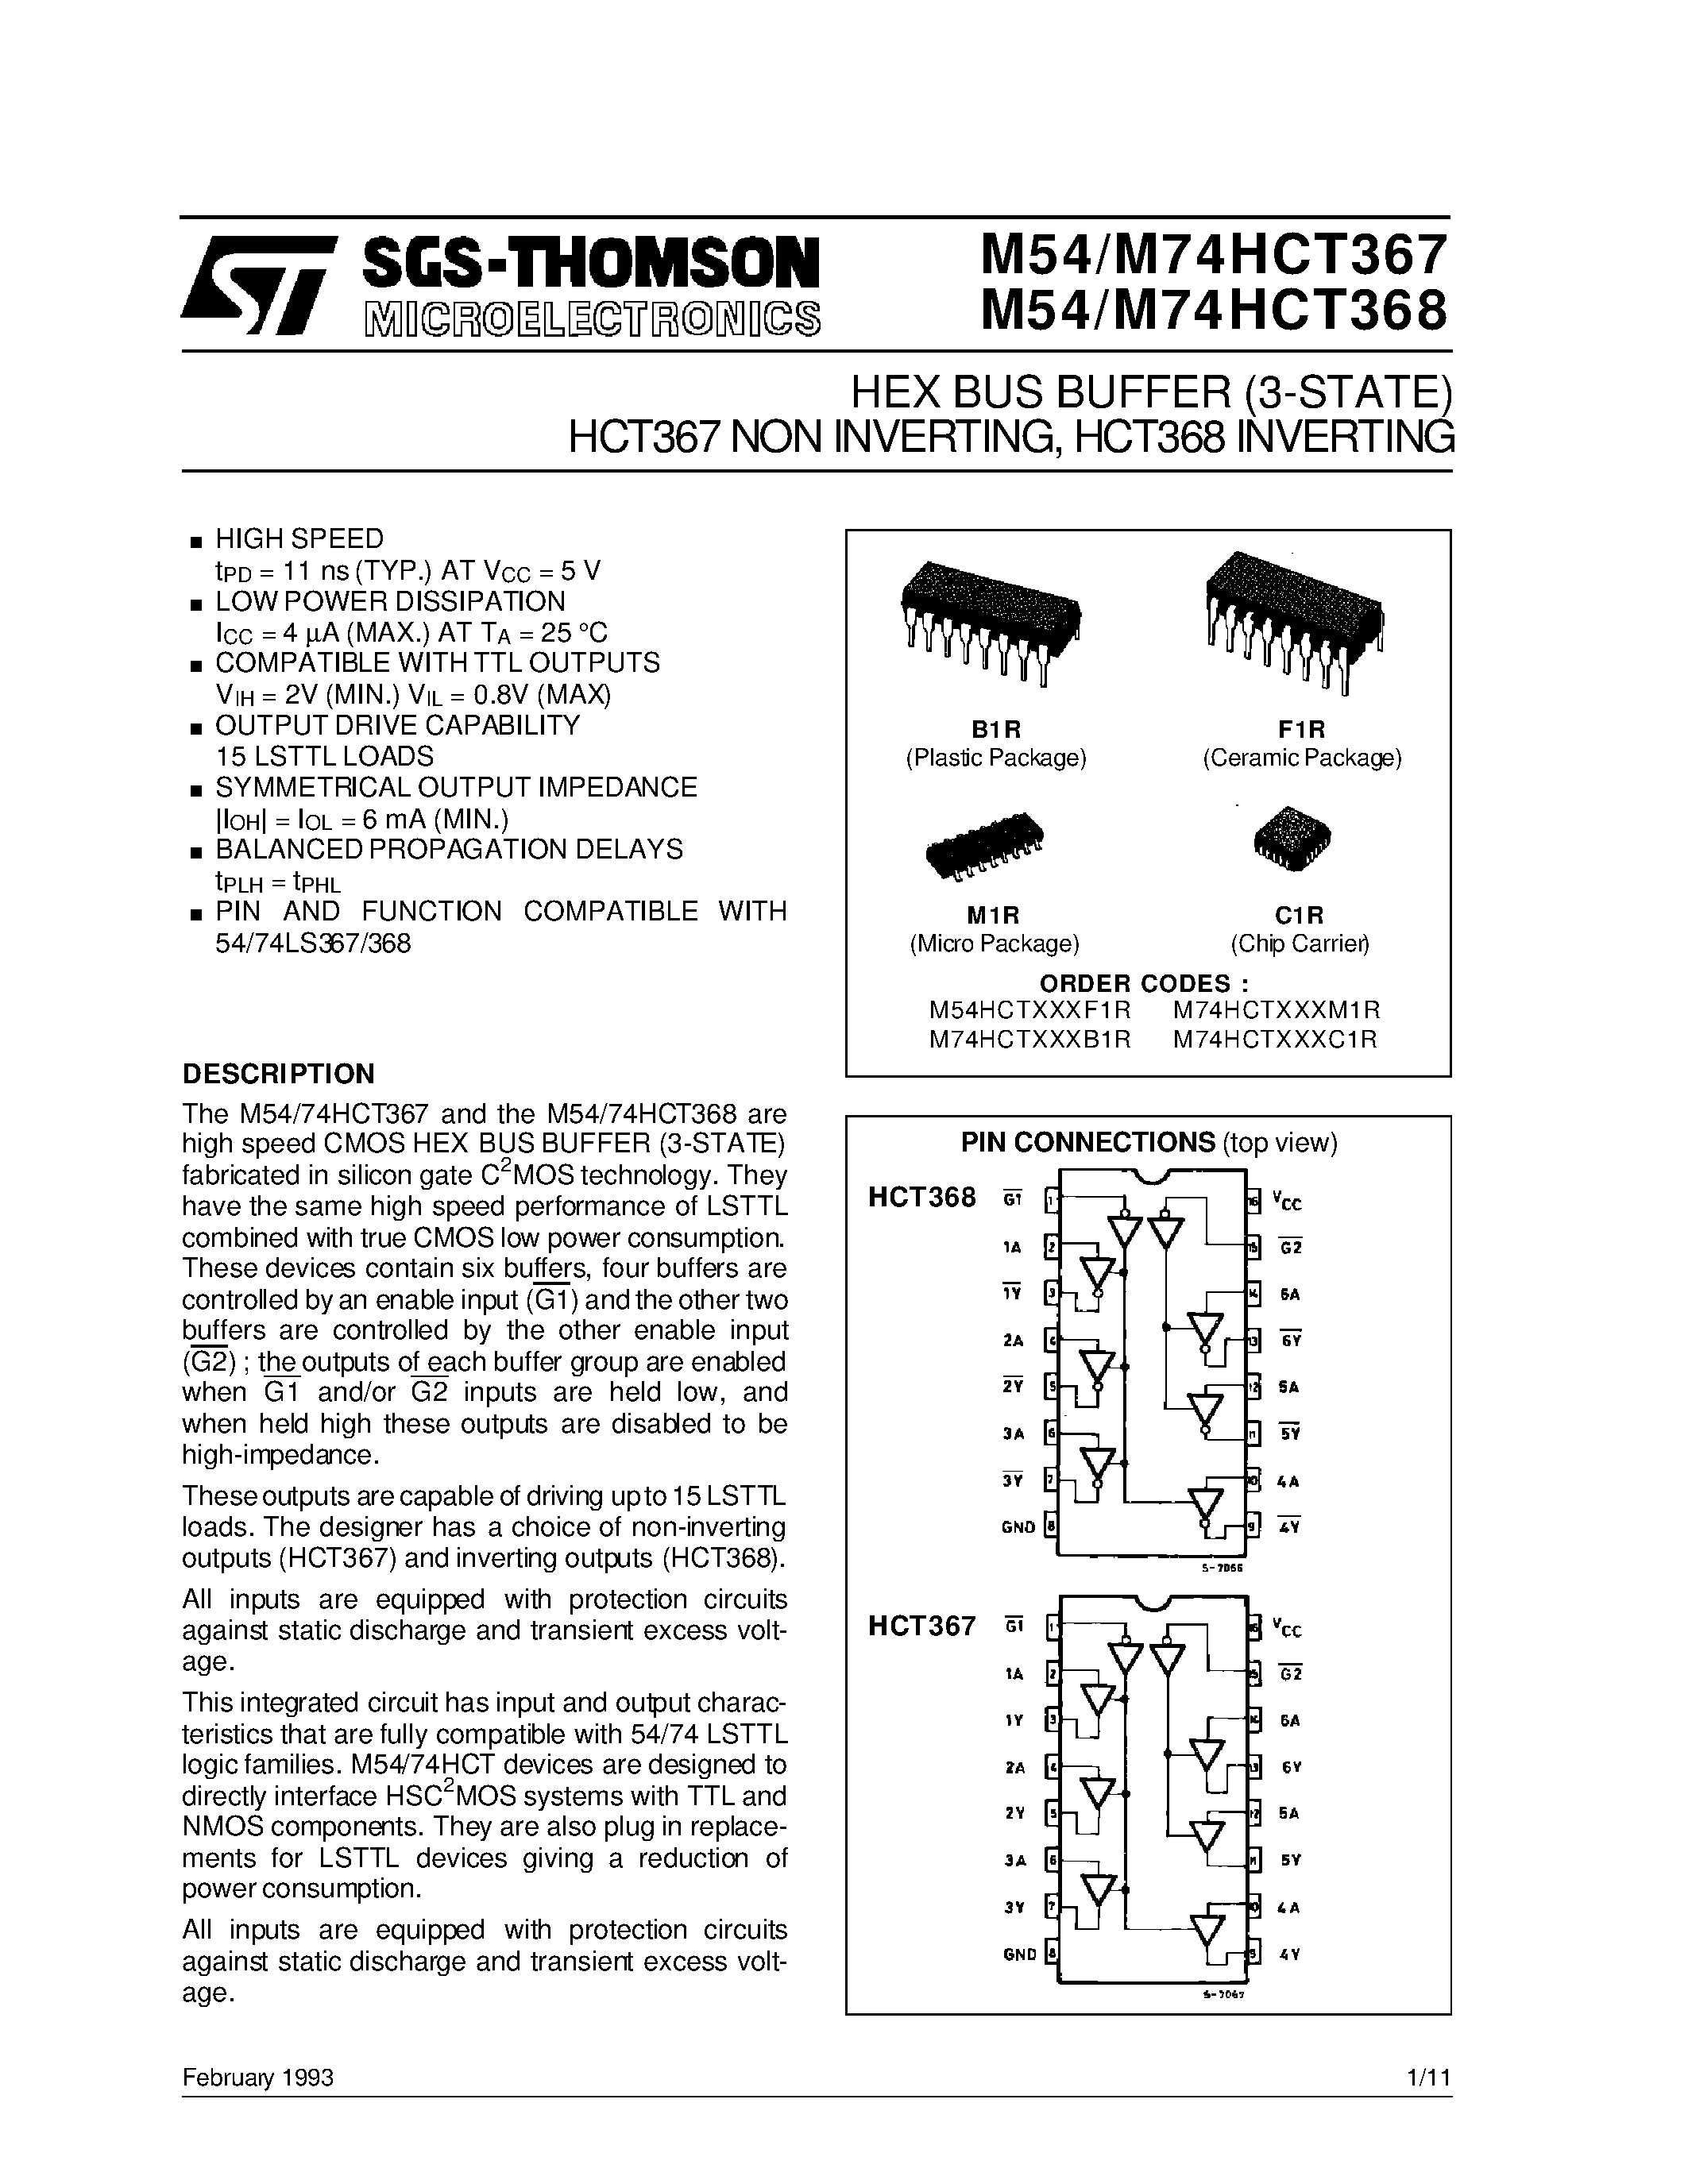 Datasheet M74HCT367 - HEX BUS BUFFER 3-STATE HCT367 NONINVERTING / HCT368 INVERTING page 1